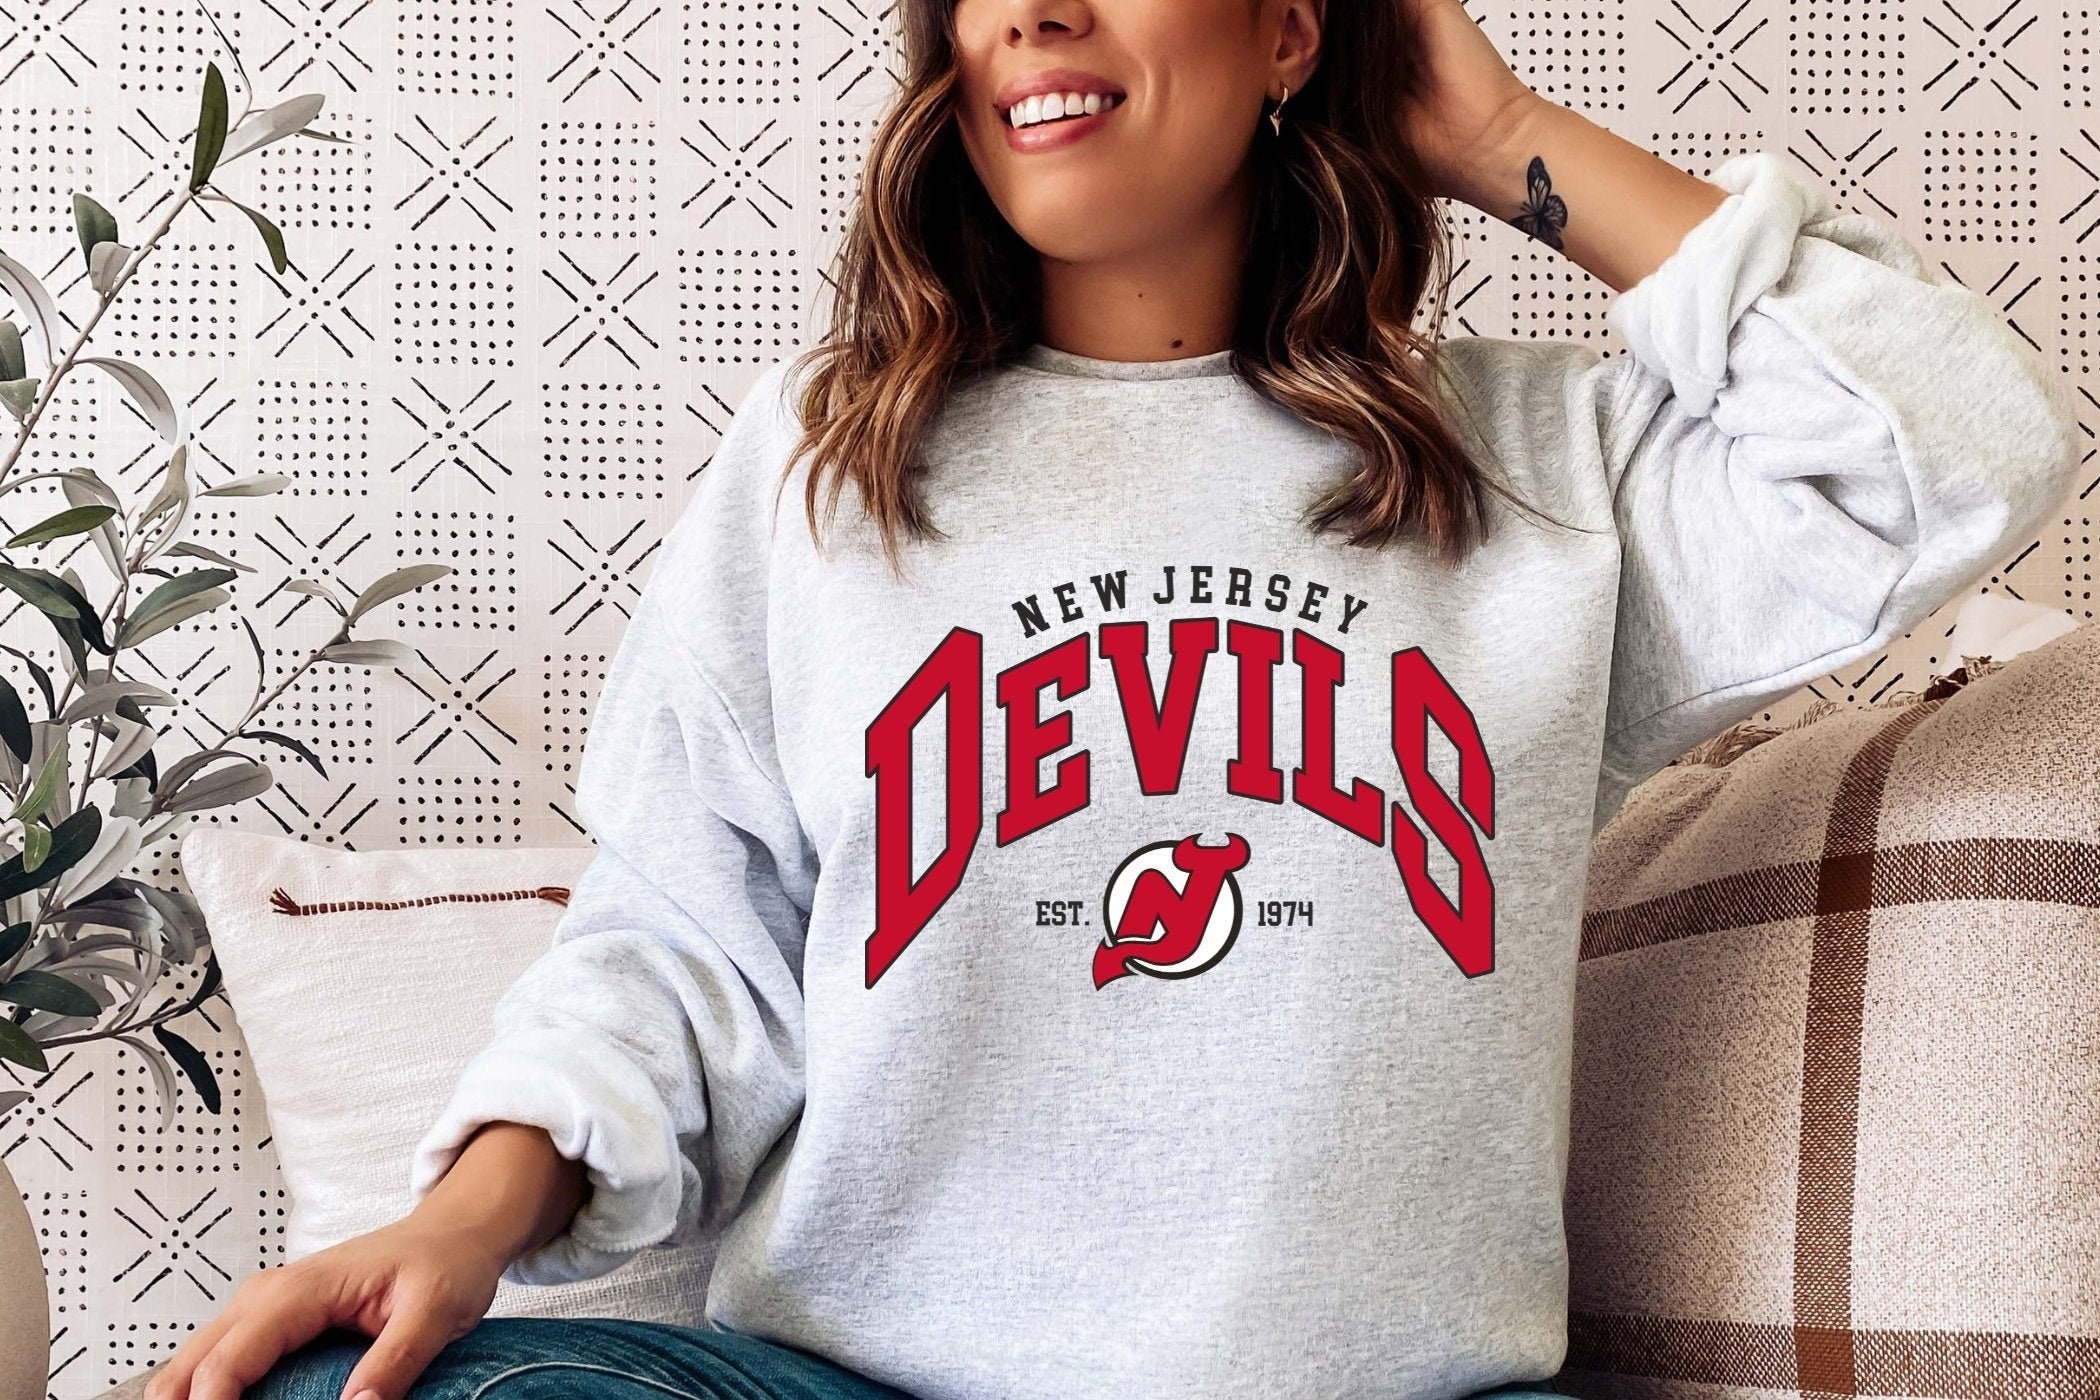 New Jersey Devils Apparel, Devils Clothing & Gear